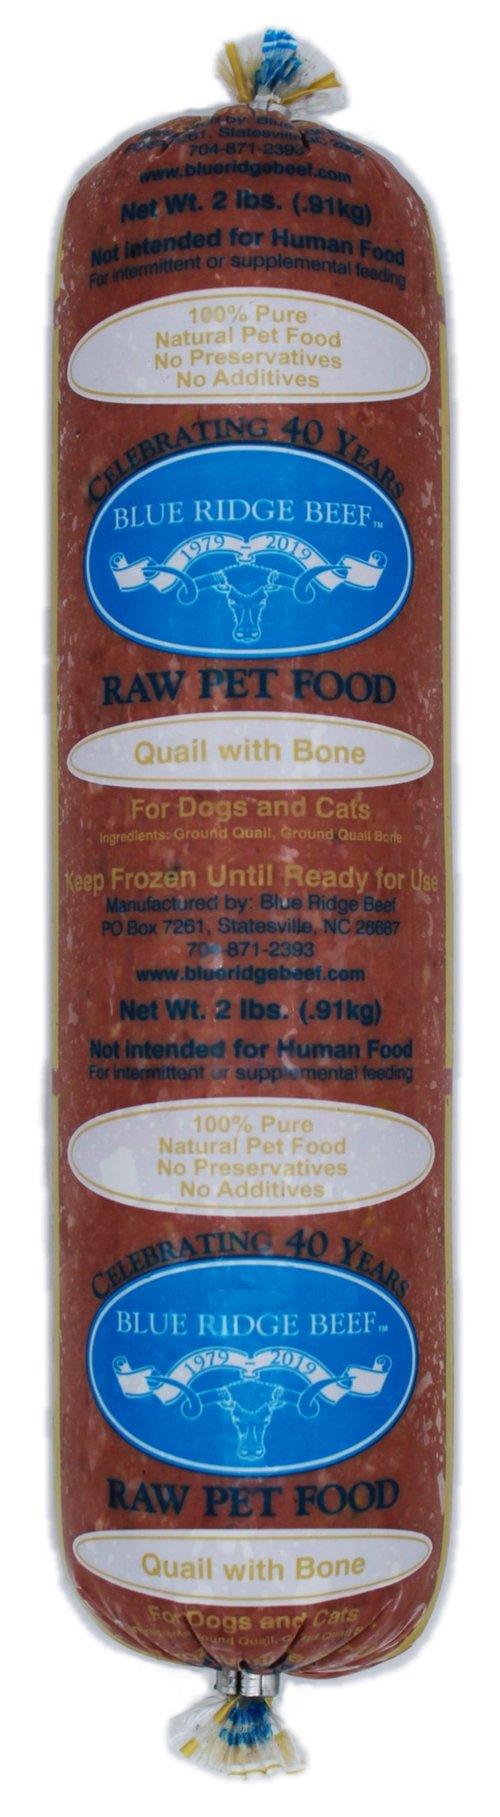 Blue Ridge Beef Quail with Bone Natural Raw Dog Food (2 lb. chubs)